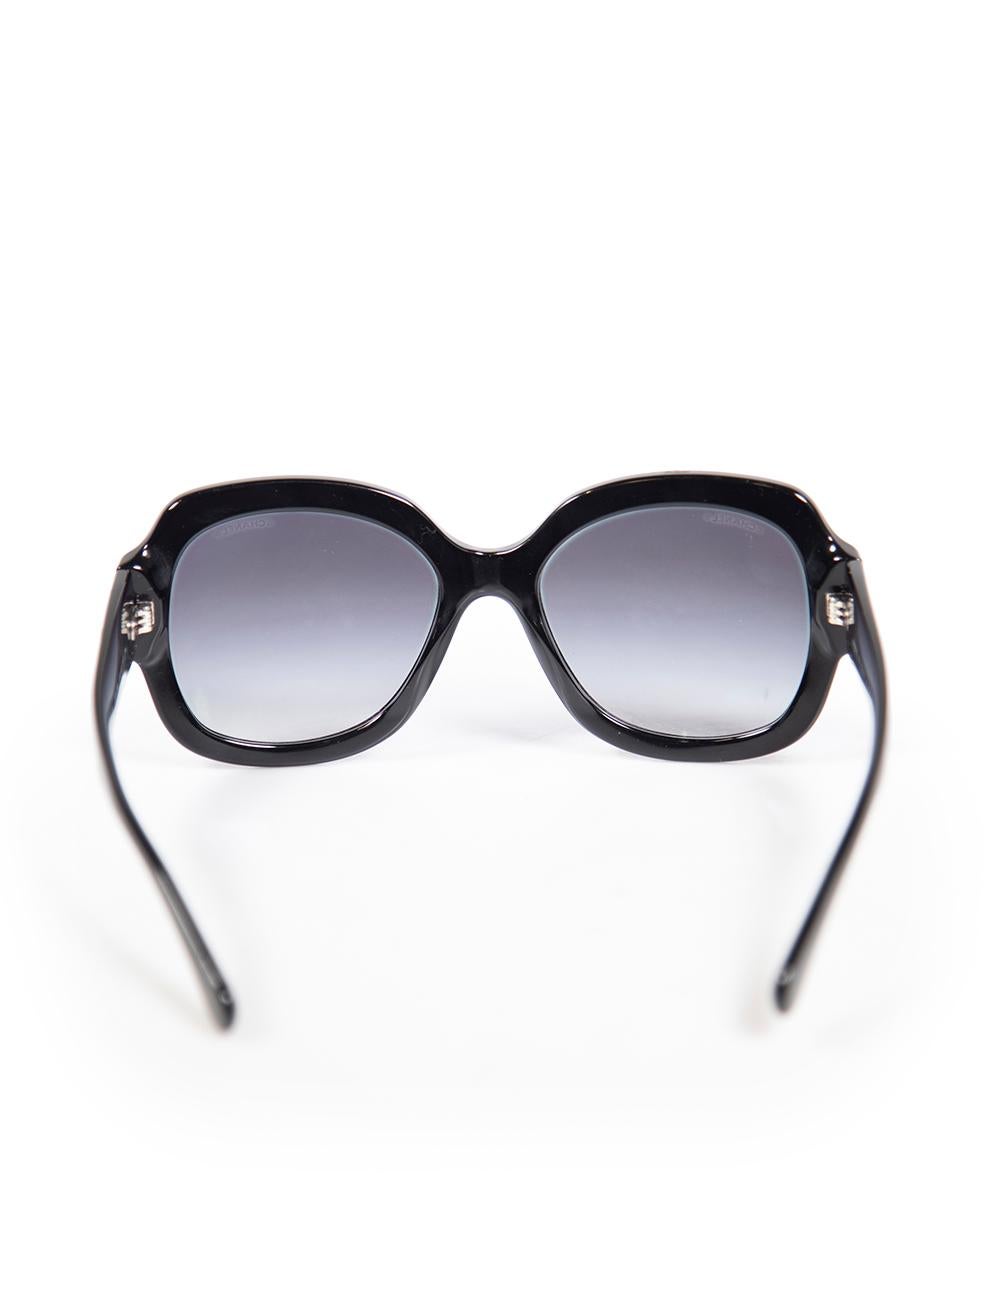 Chanel Black Interlocking CC Oversized Sunglasses In Good Condition For Sale In London, GB